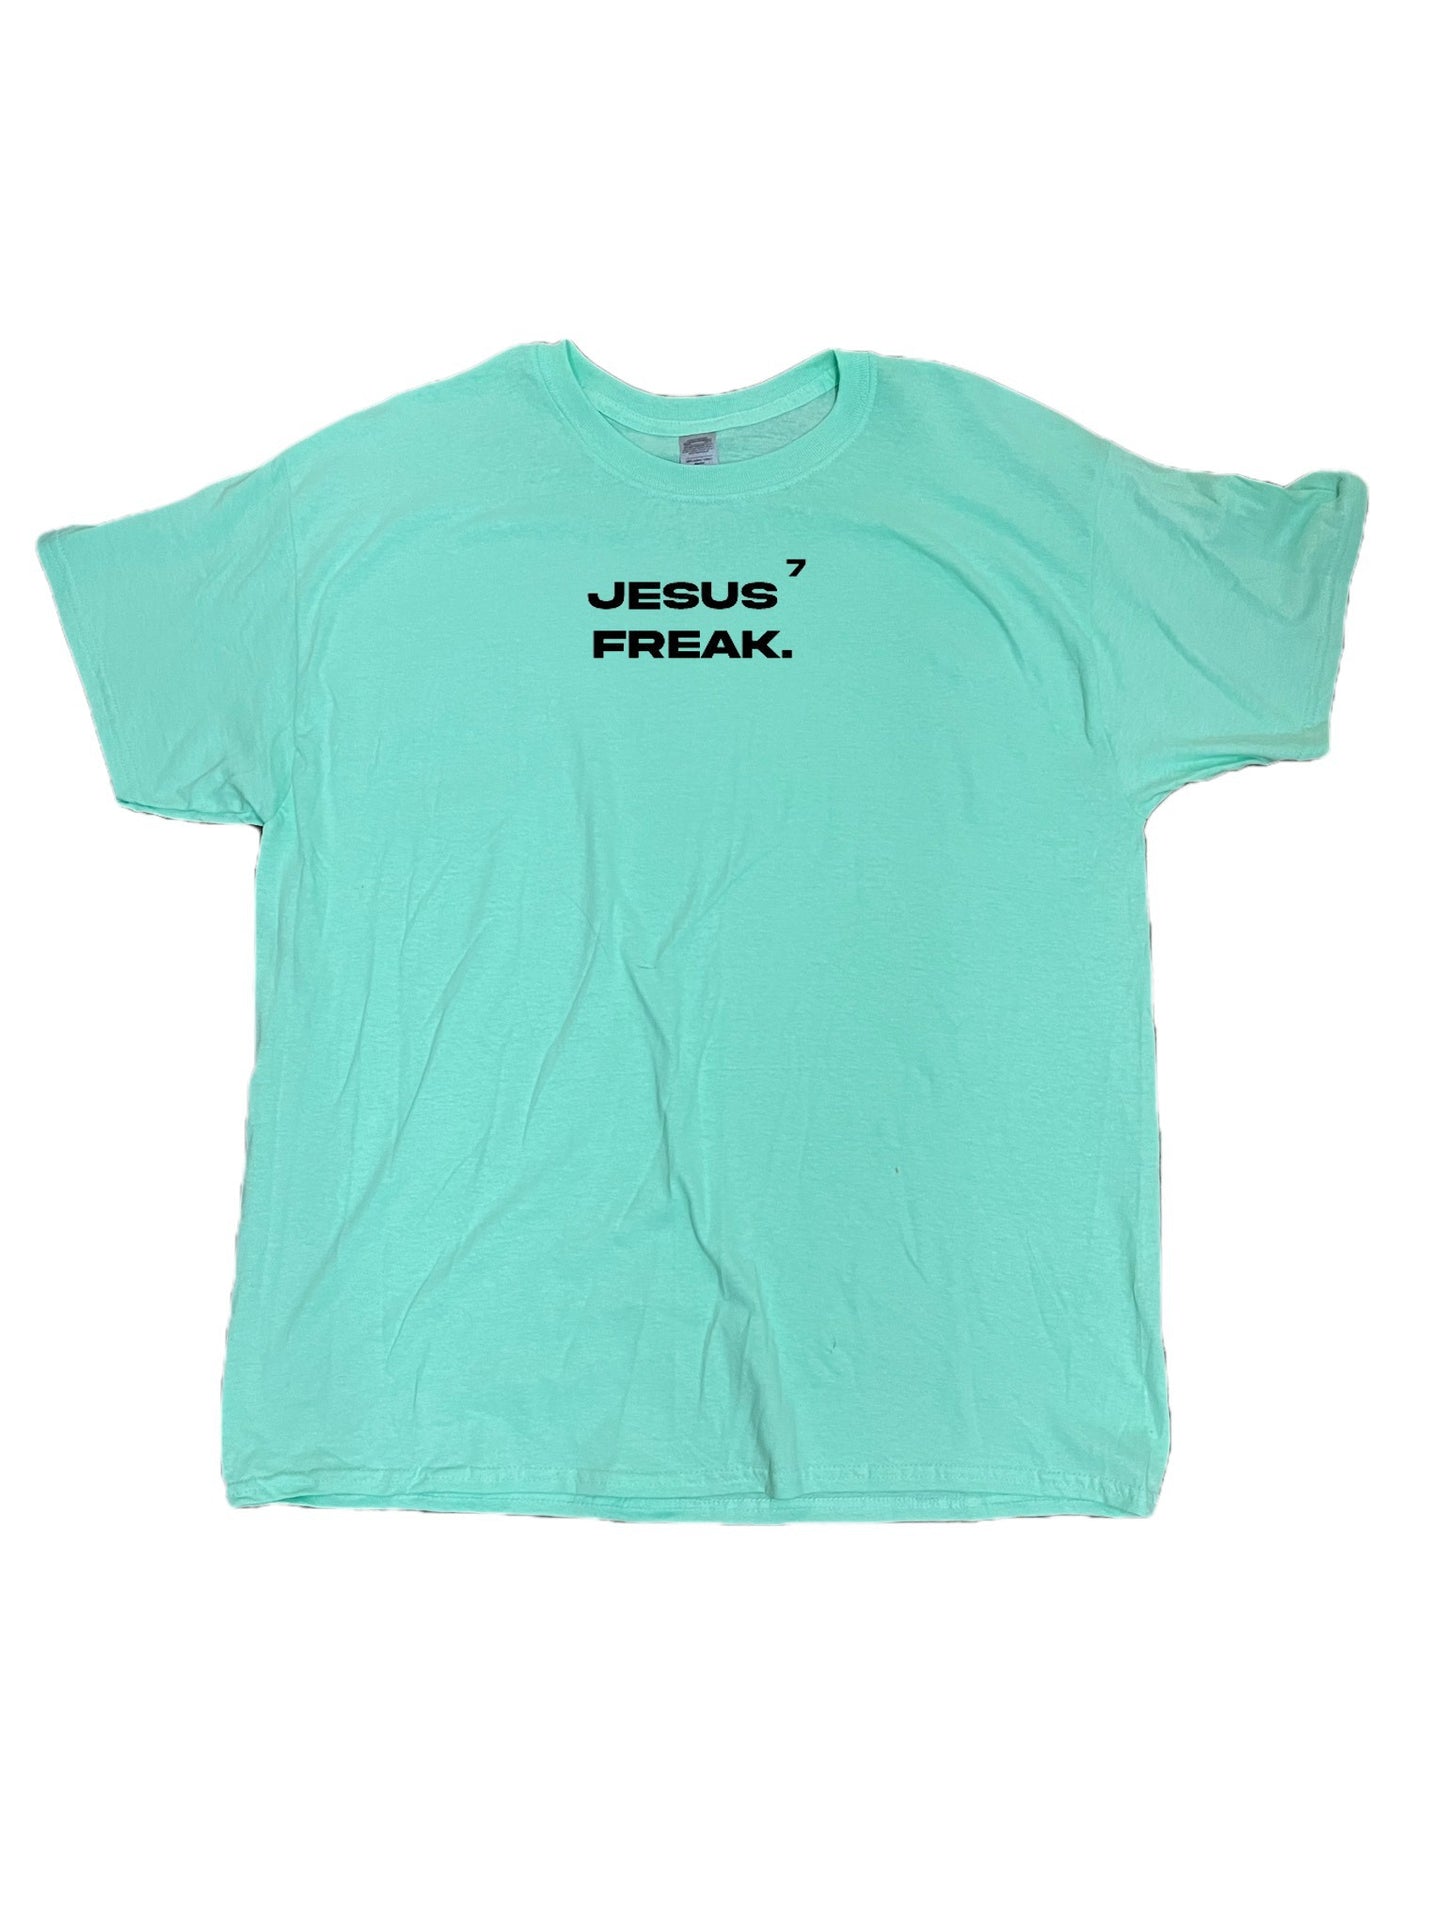 Aspect's "Jesus Freak" T-Shirt